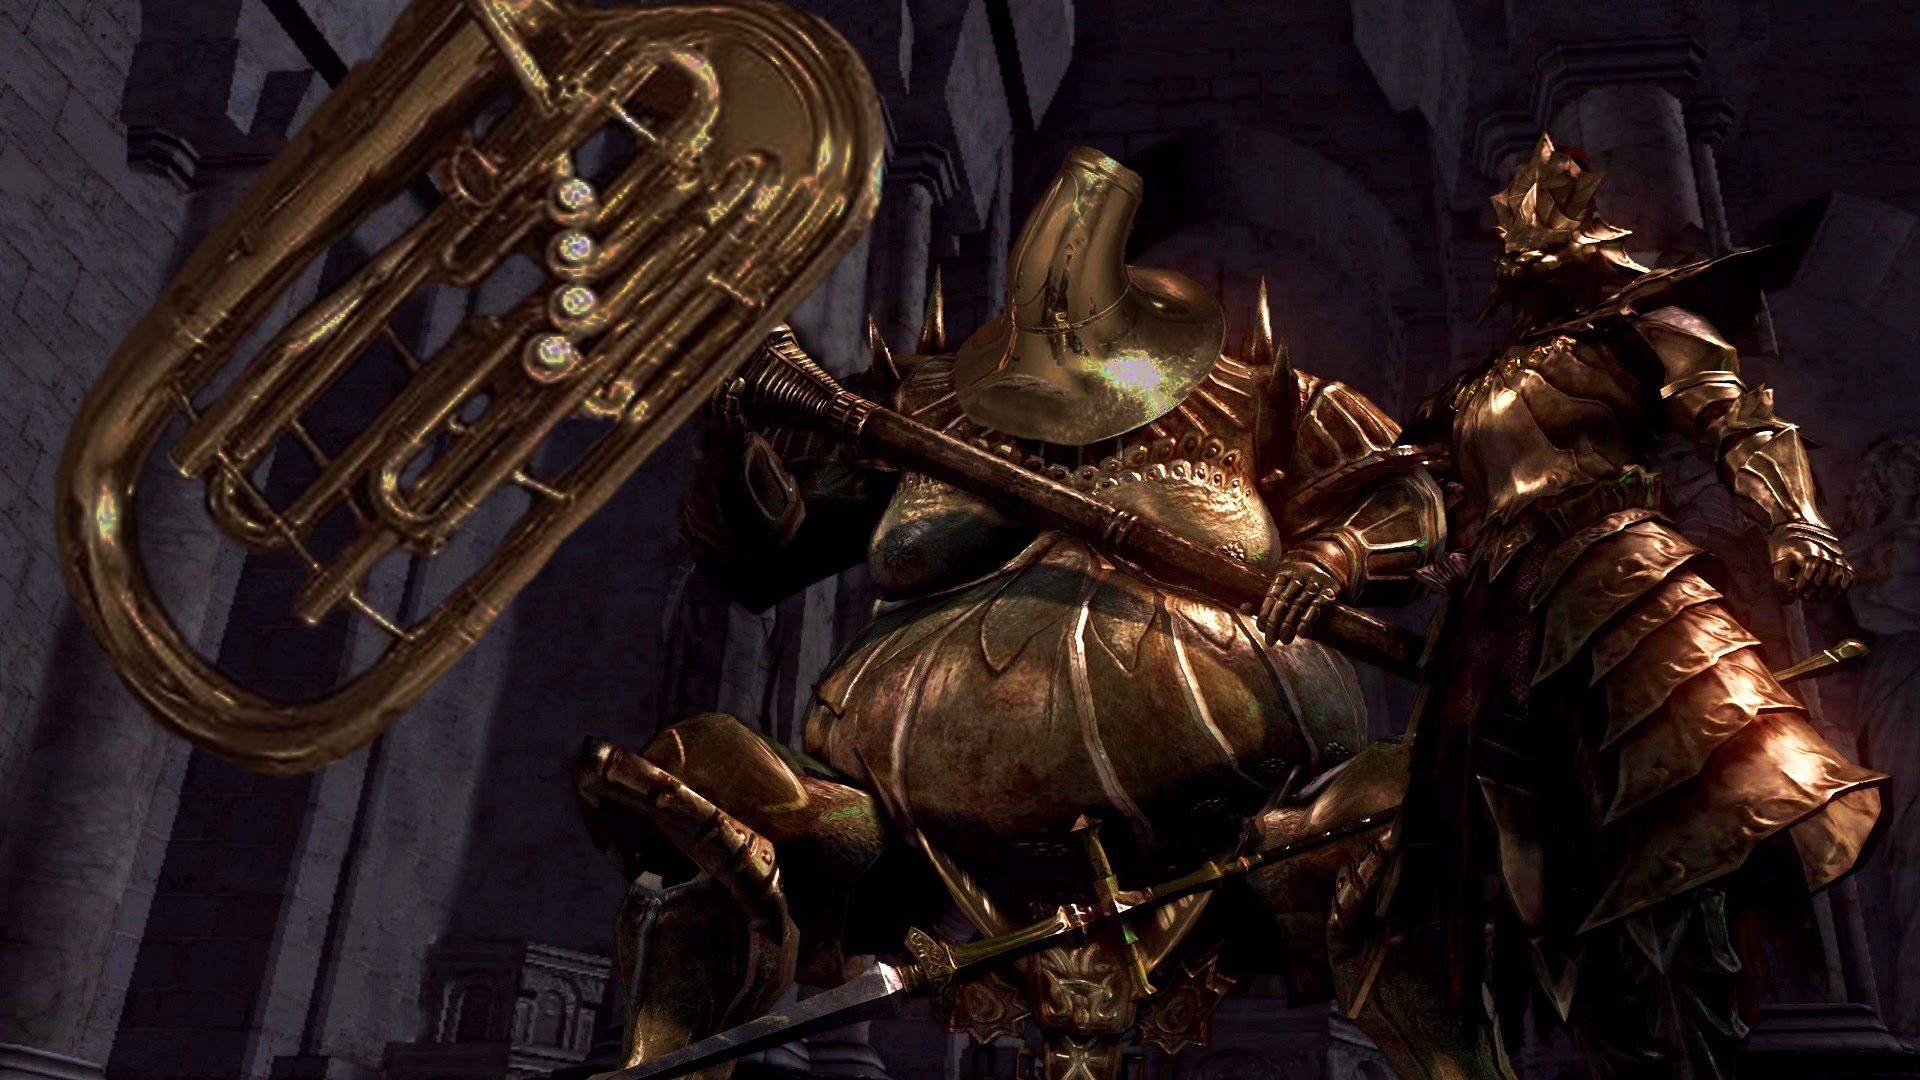 Brass Enforcer is a mighty beast created by King Tuba II. 